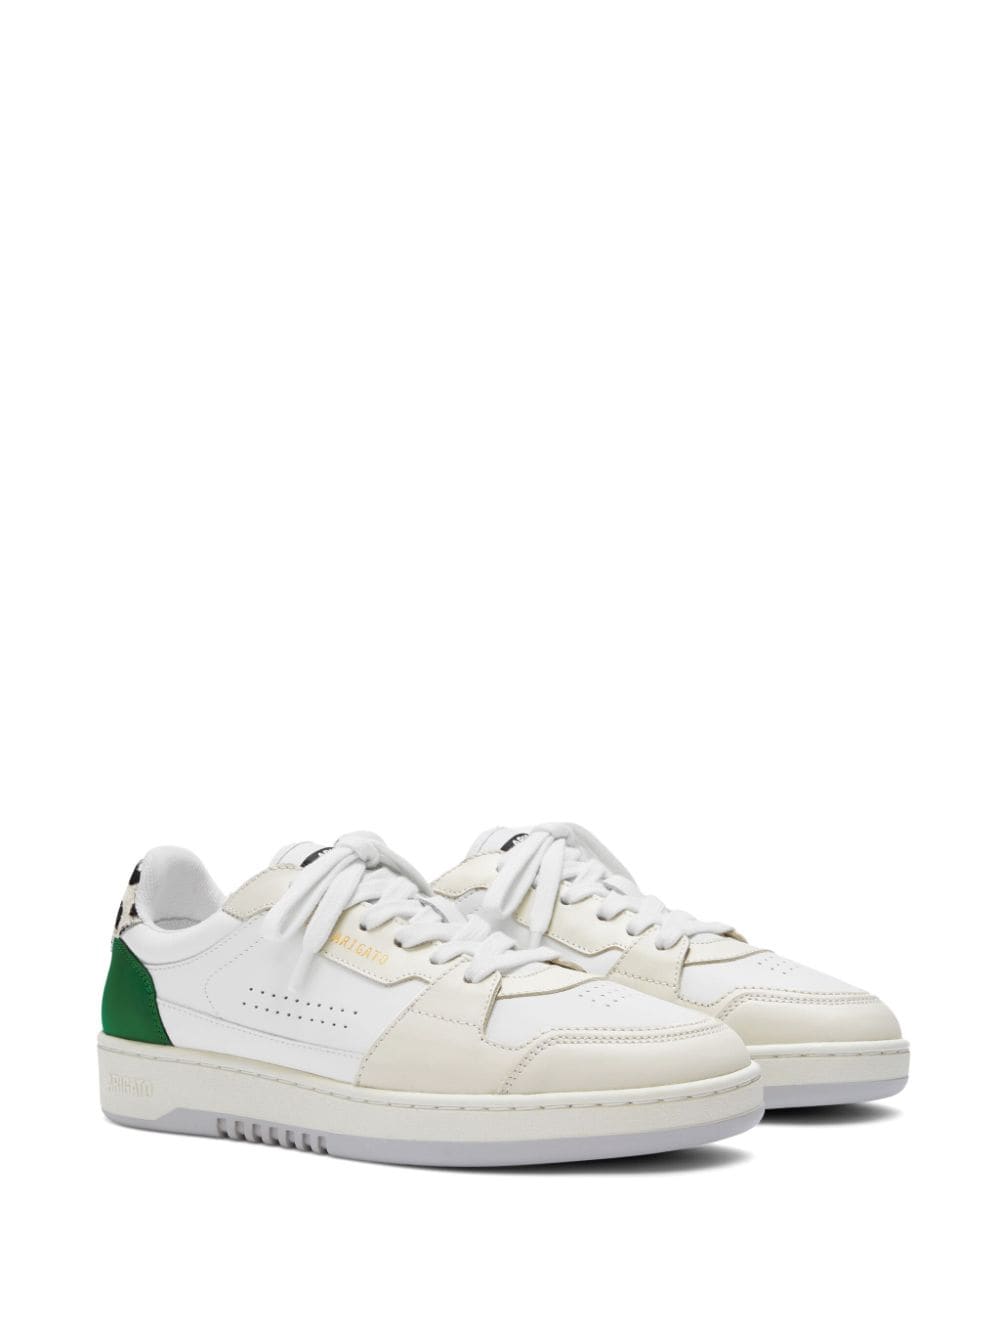 Axel Arigato Dice Lo leather sneakers - WHITE/BEIGE